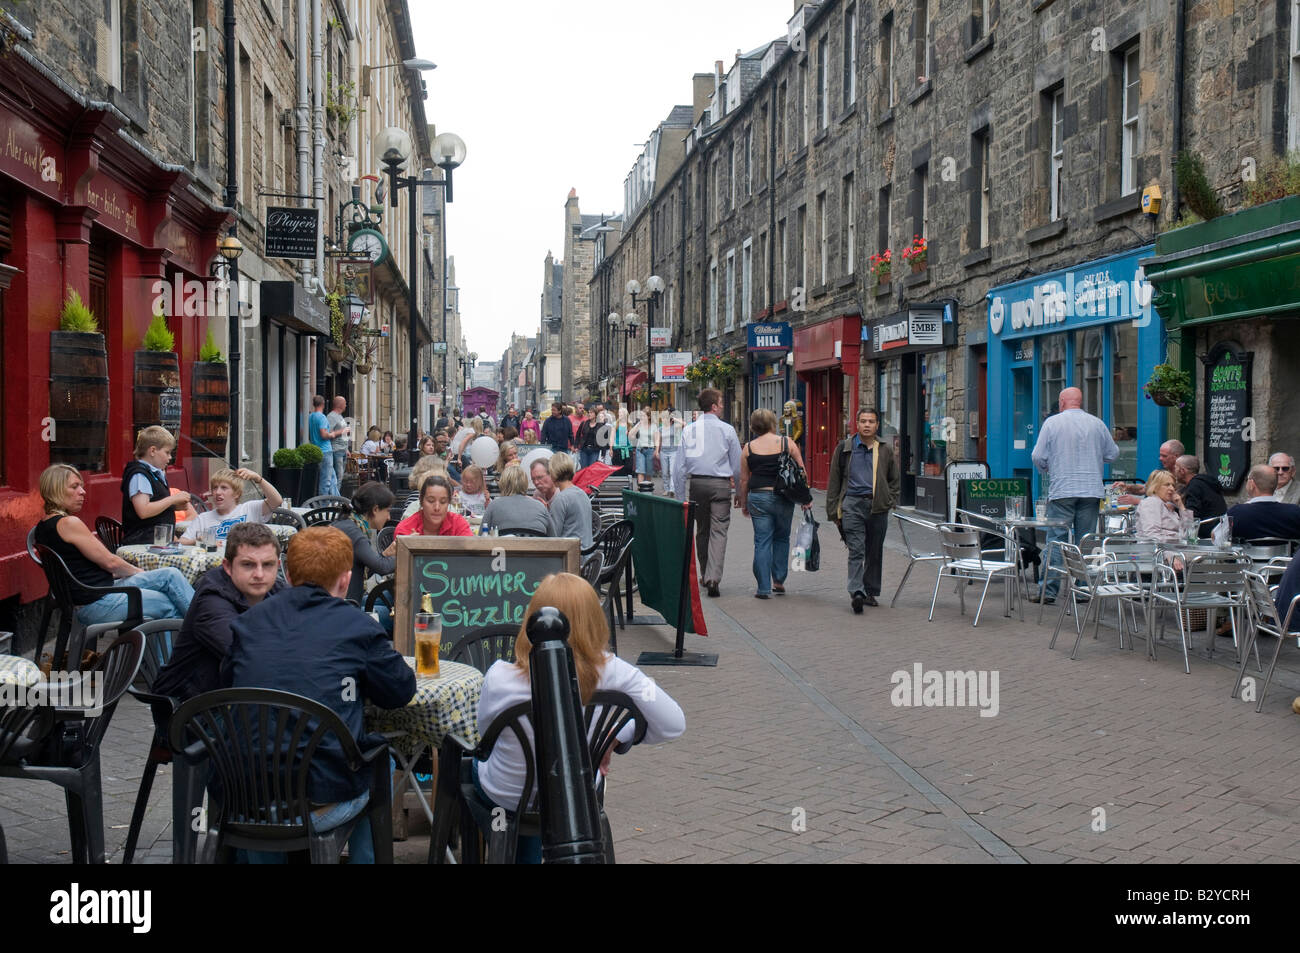 Almuerzo al aire libre, Rose Street, Edimburgo, Escocia Foto de stock